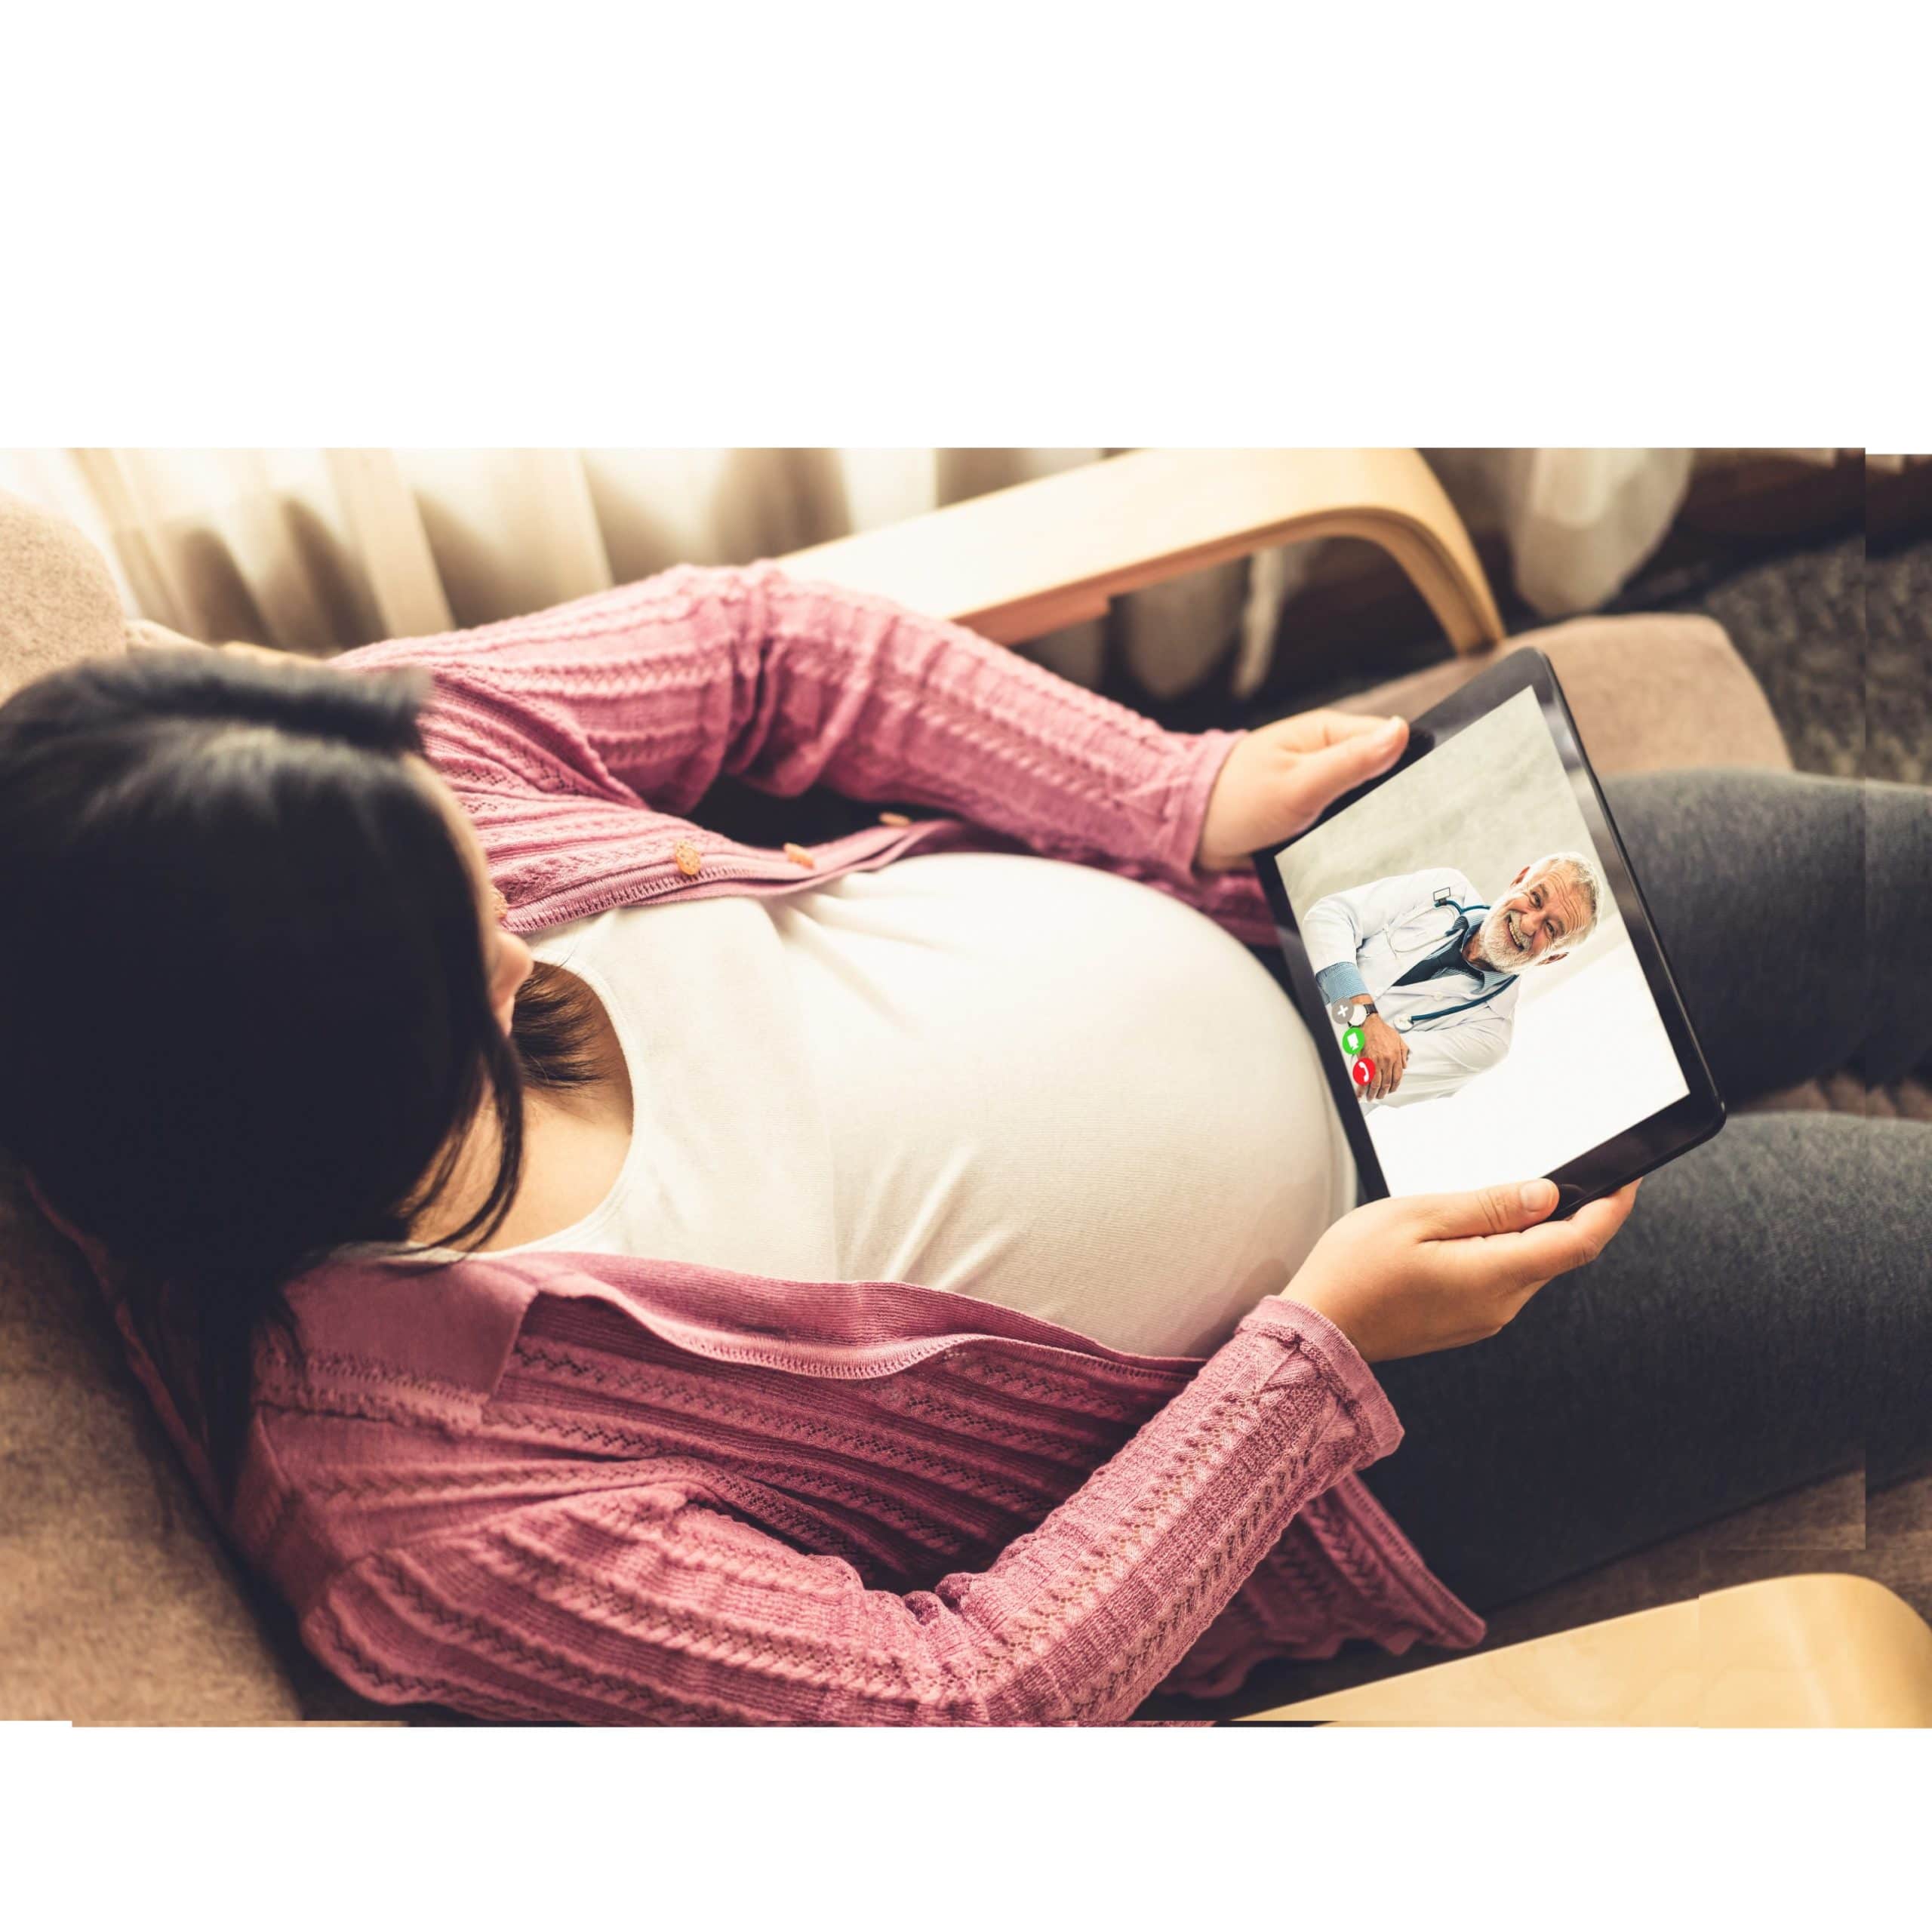 Pregnant women speaking to physician via telemedicine